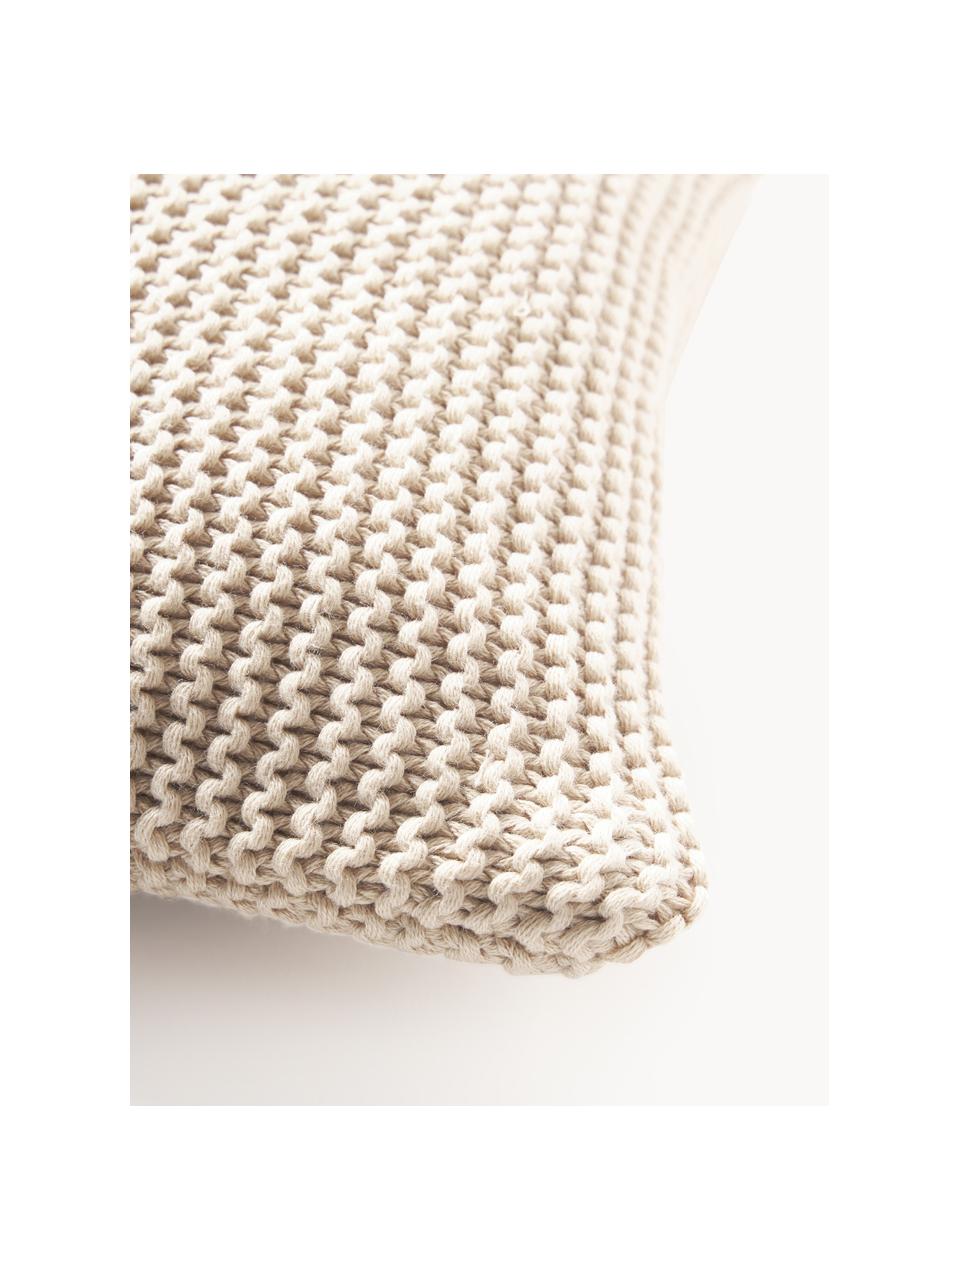 Strick-Kissenhülle Adalyn aus Bio-Baumwolle, 100% Bio-Baumwolle, GOTS-zertifiziert, Hellbeige, B 40 x L 40 cm